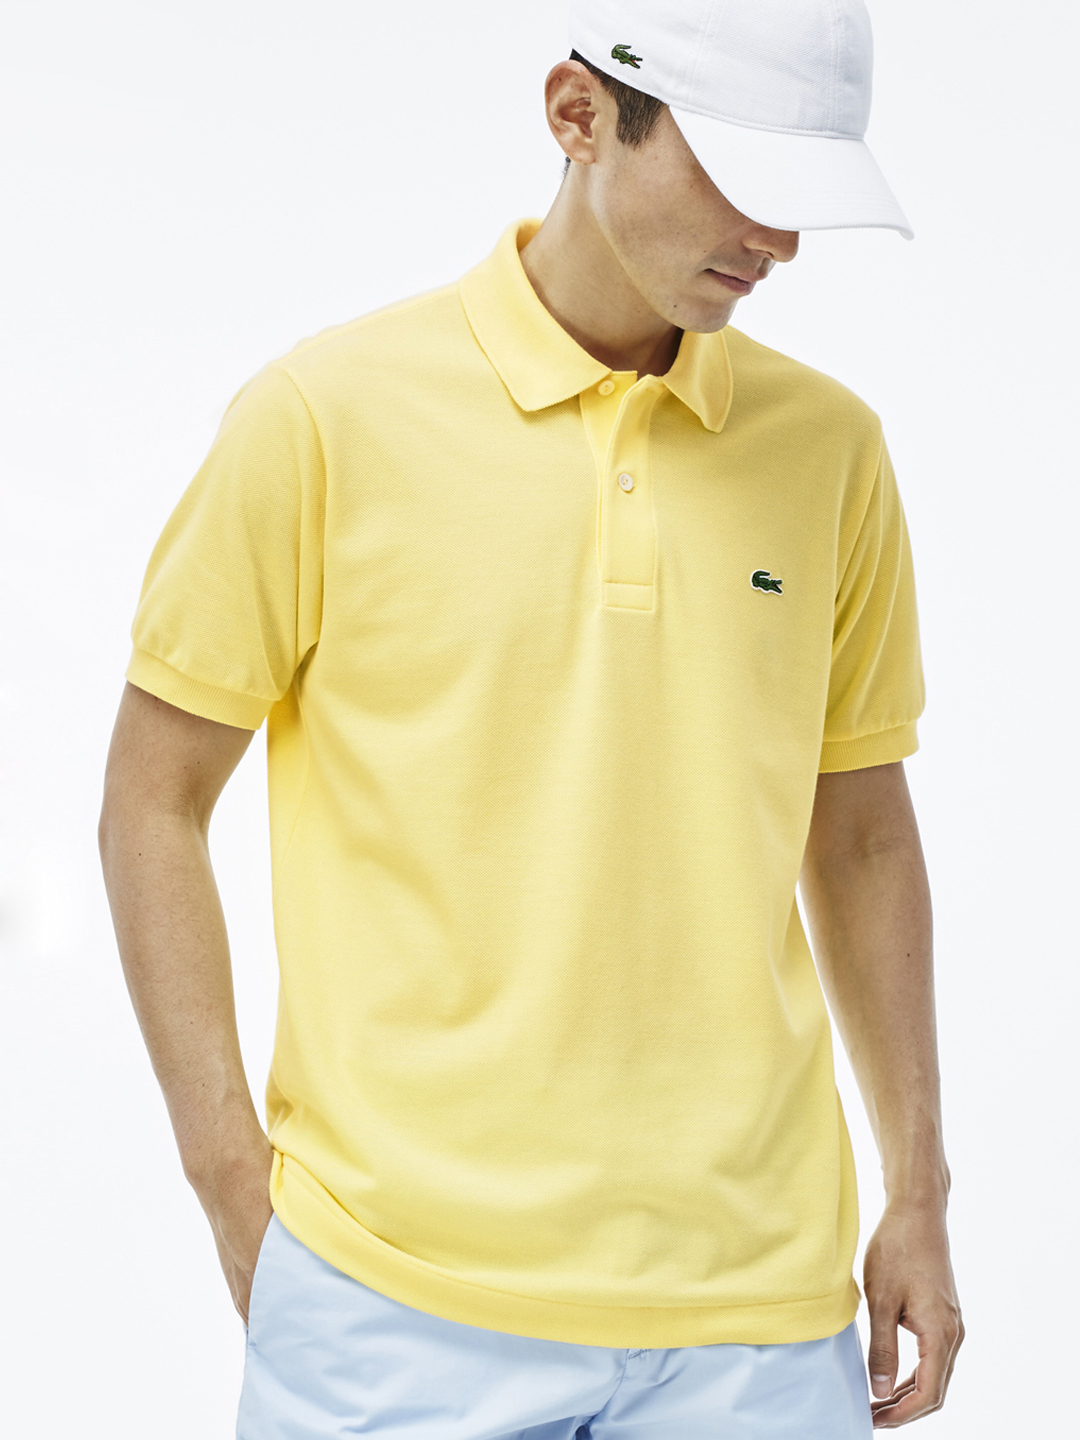 yellow lacoste polo shirt